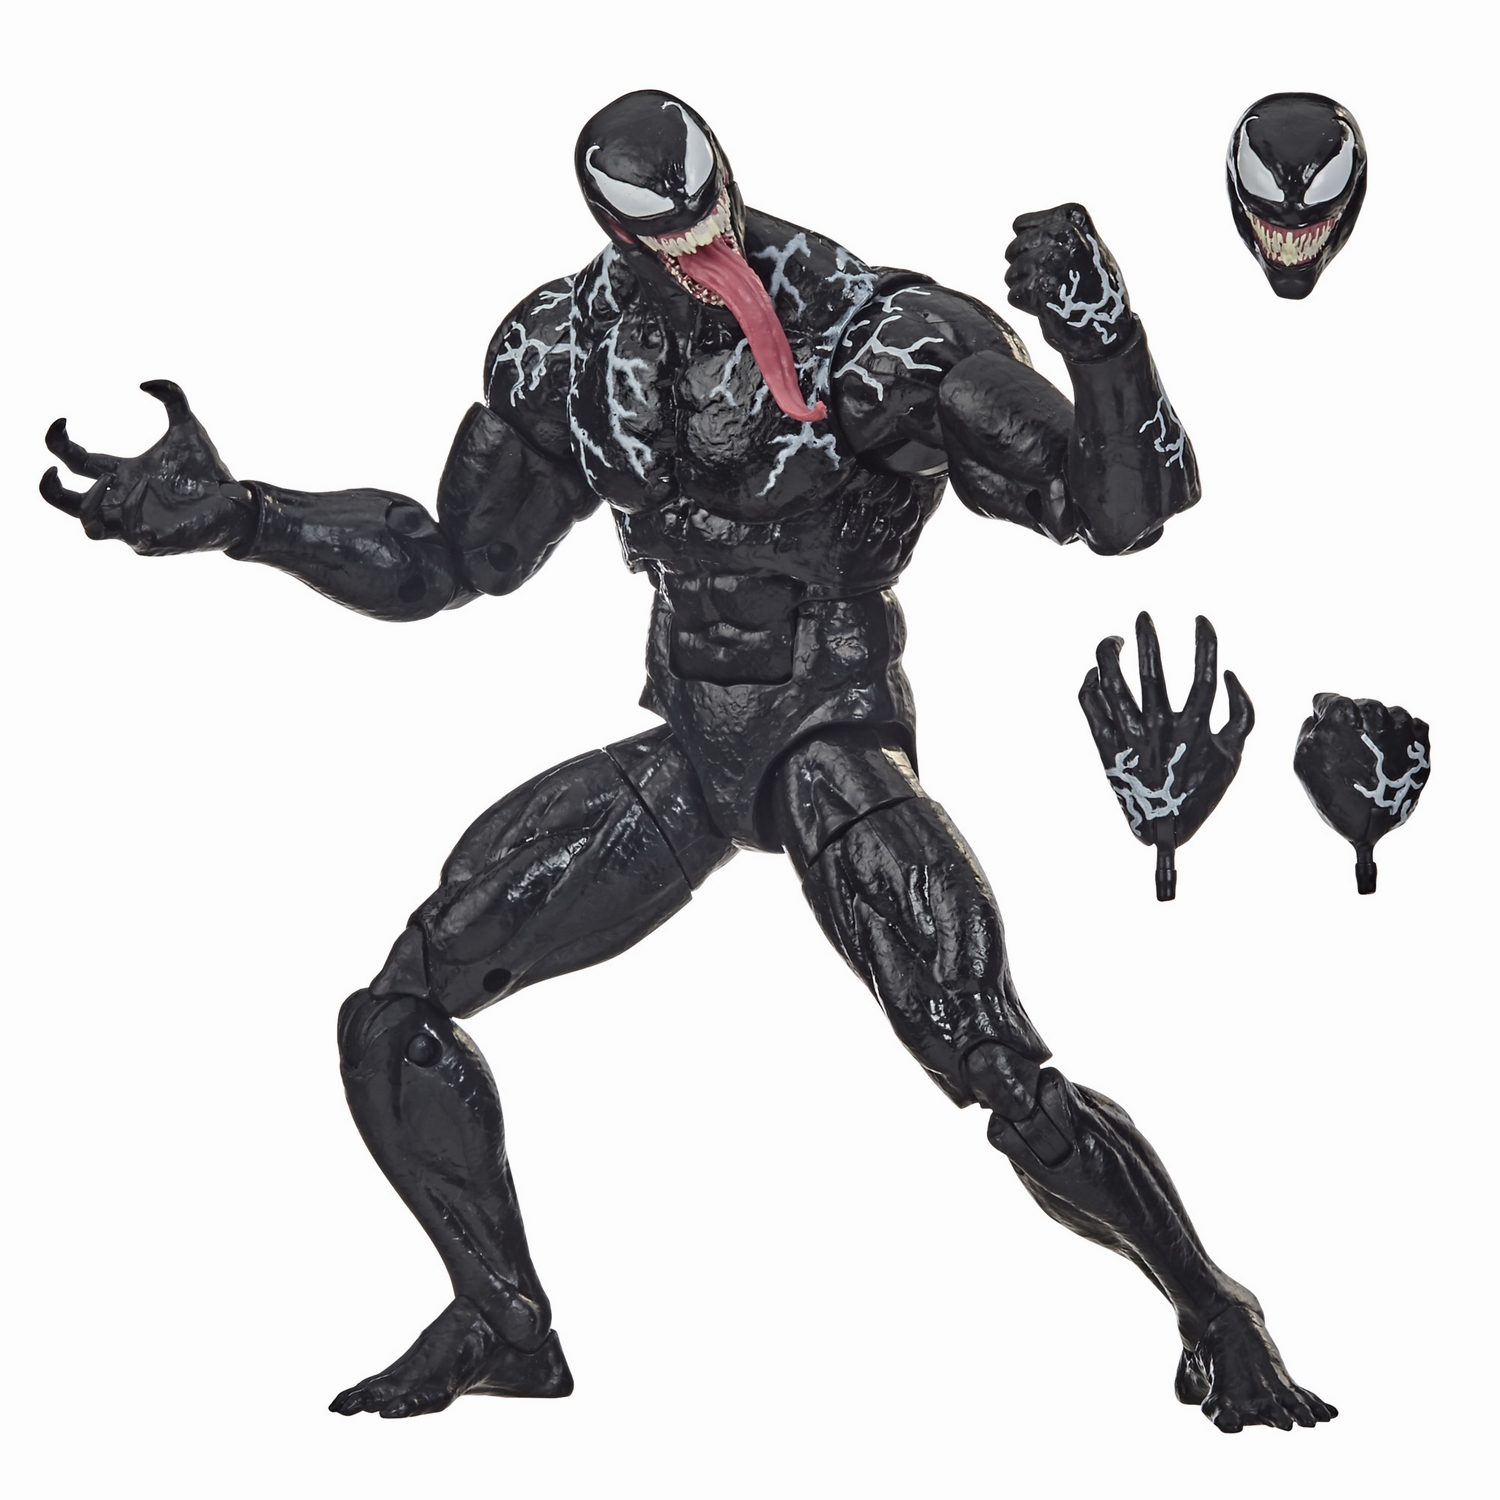 MARVEL LEGENDS SERIES 6-INCH VENOM Figure Assortment - Venom (8).jpg